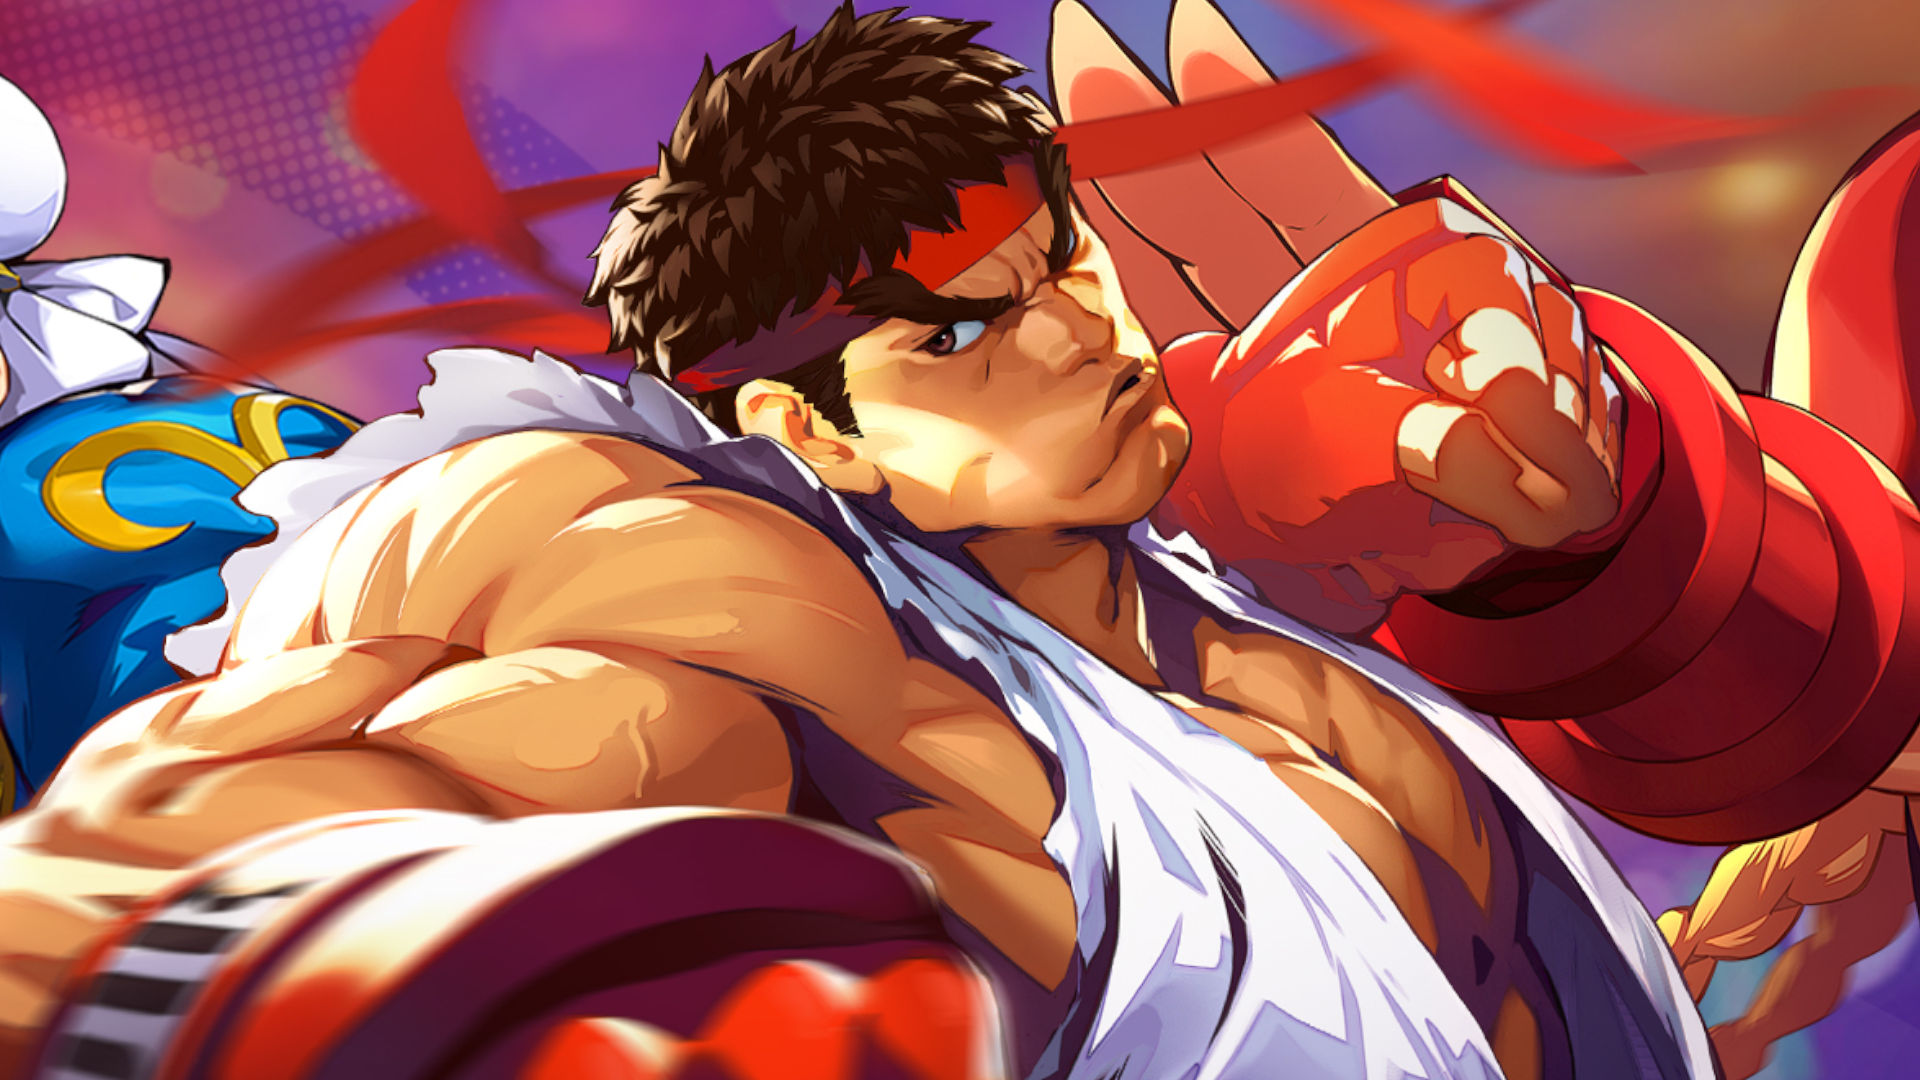 Street Fighter Duel Mobile RPG is Officially Live! - Crunchyroll News